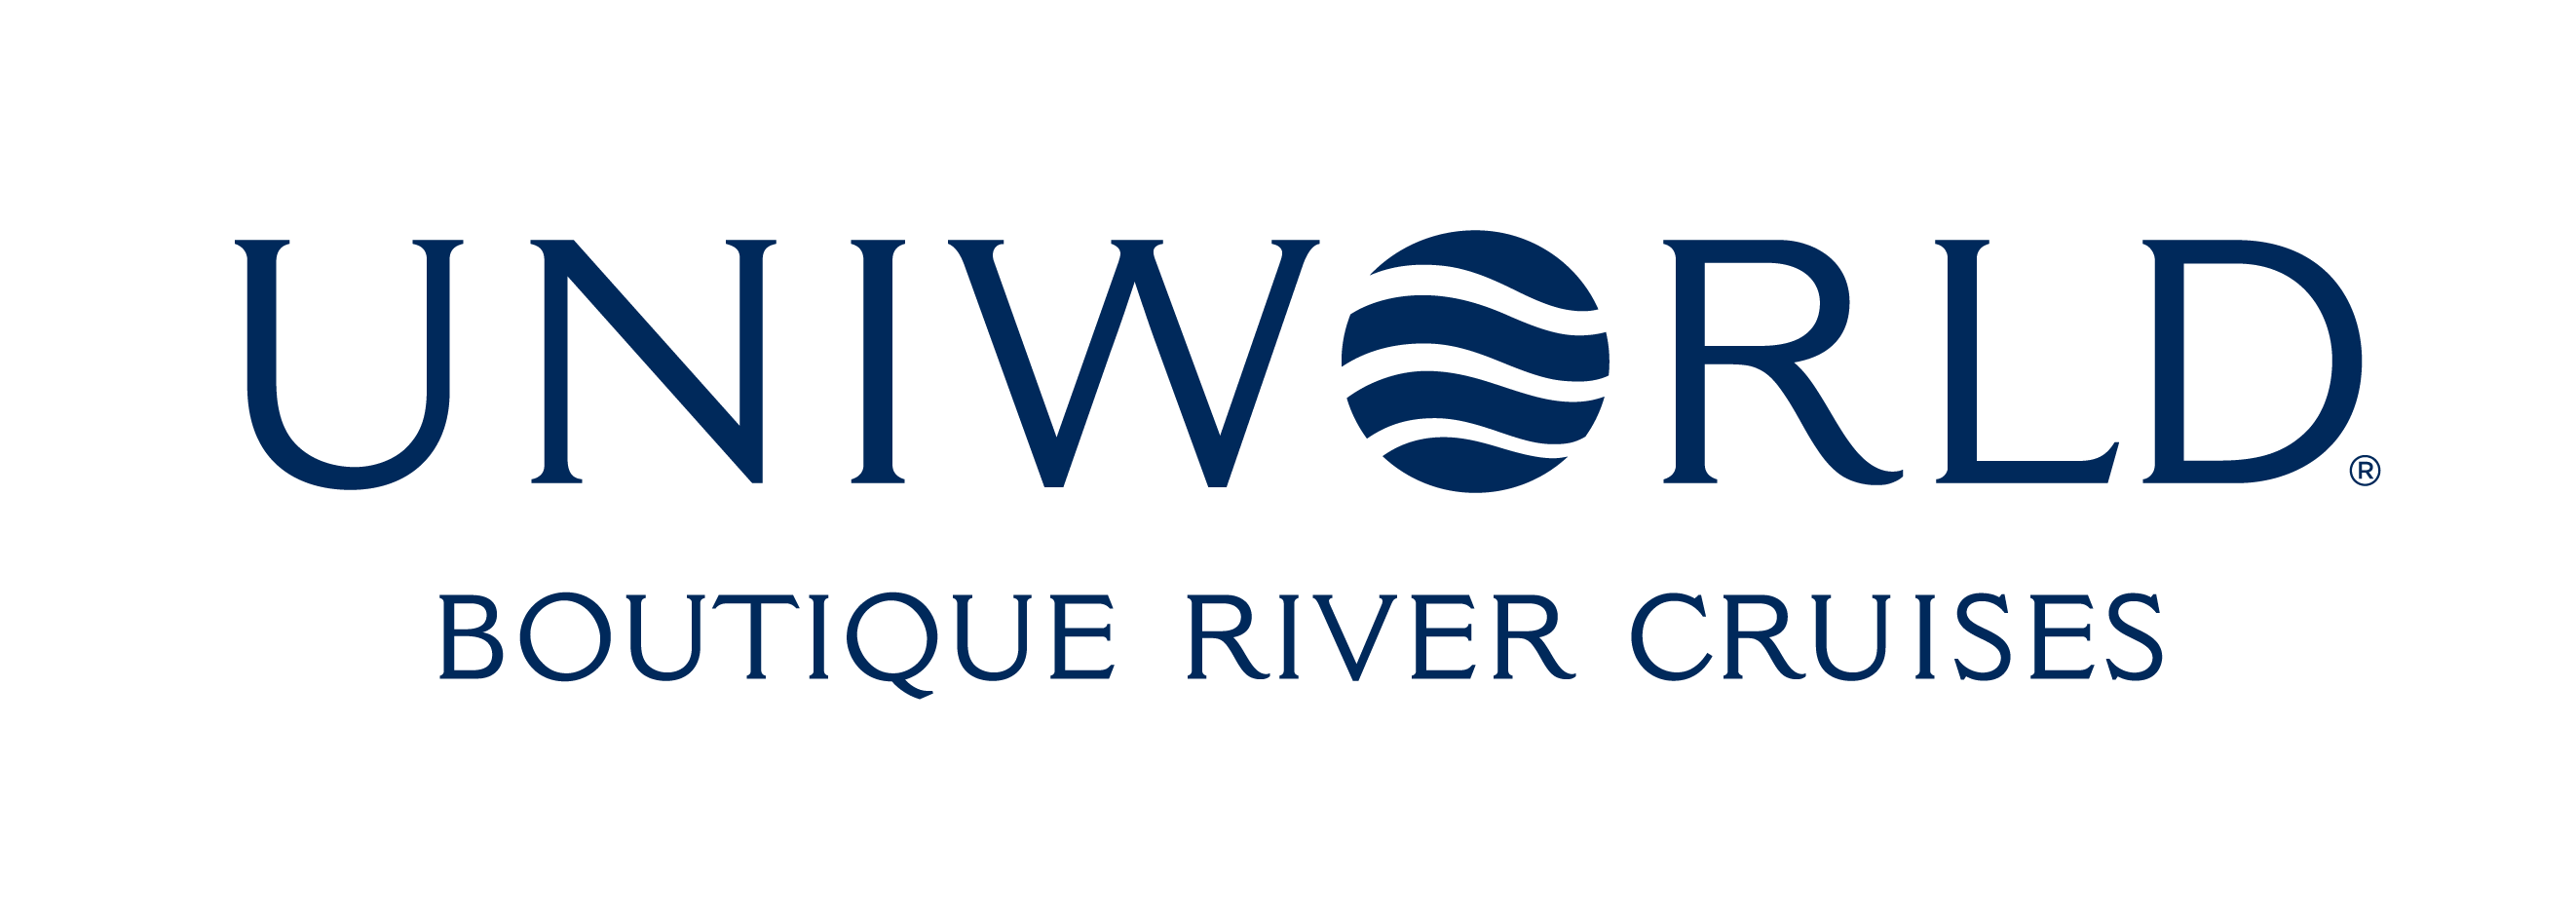 Uniworld River Cruises Specials CruiseInsider